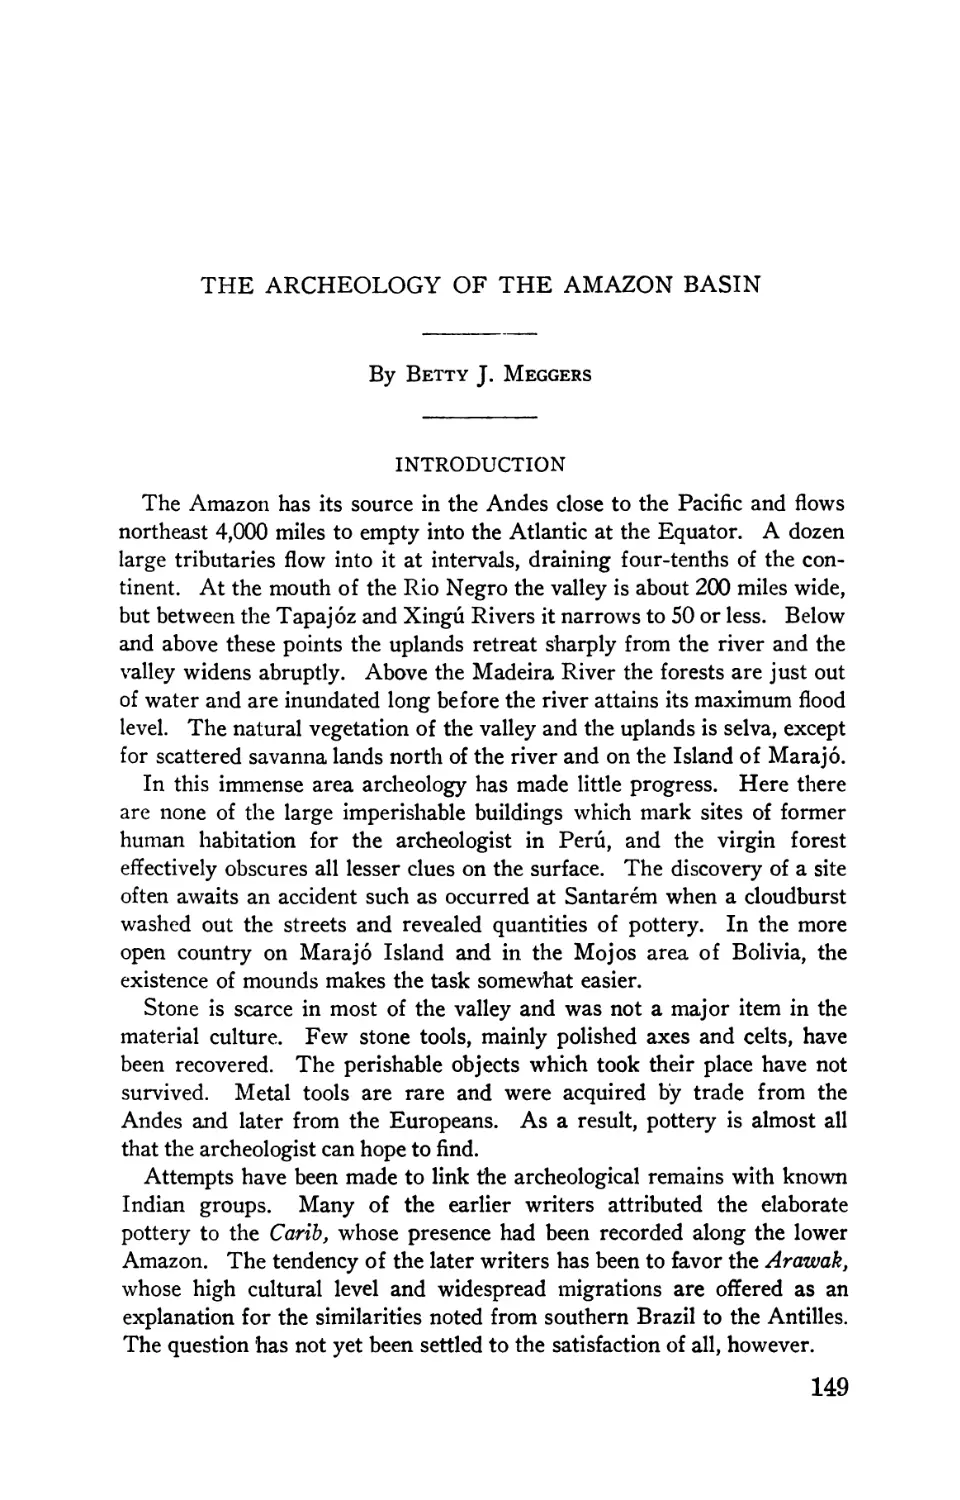 The archeology of the Amazon Basin, by Betty J. Meggers